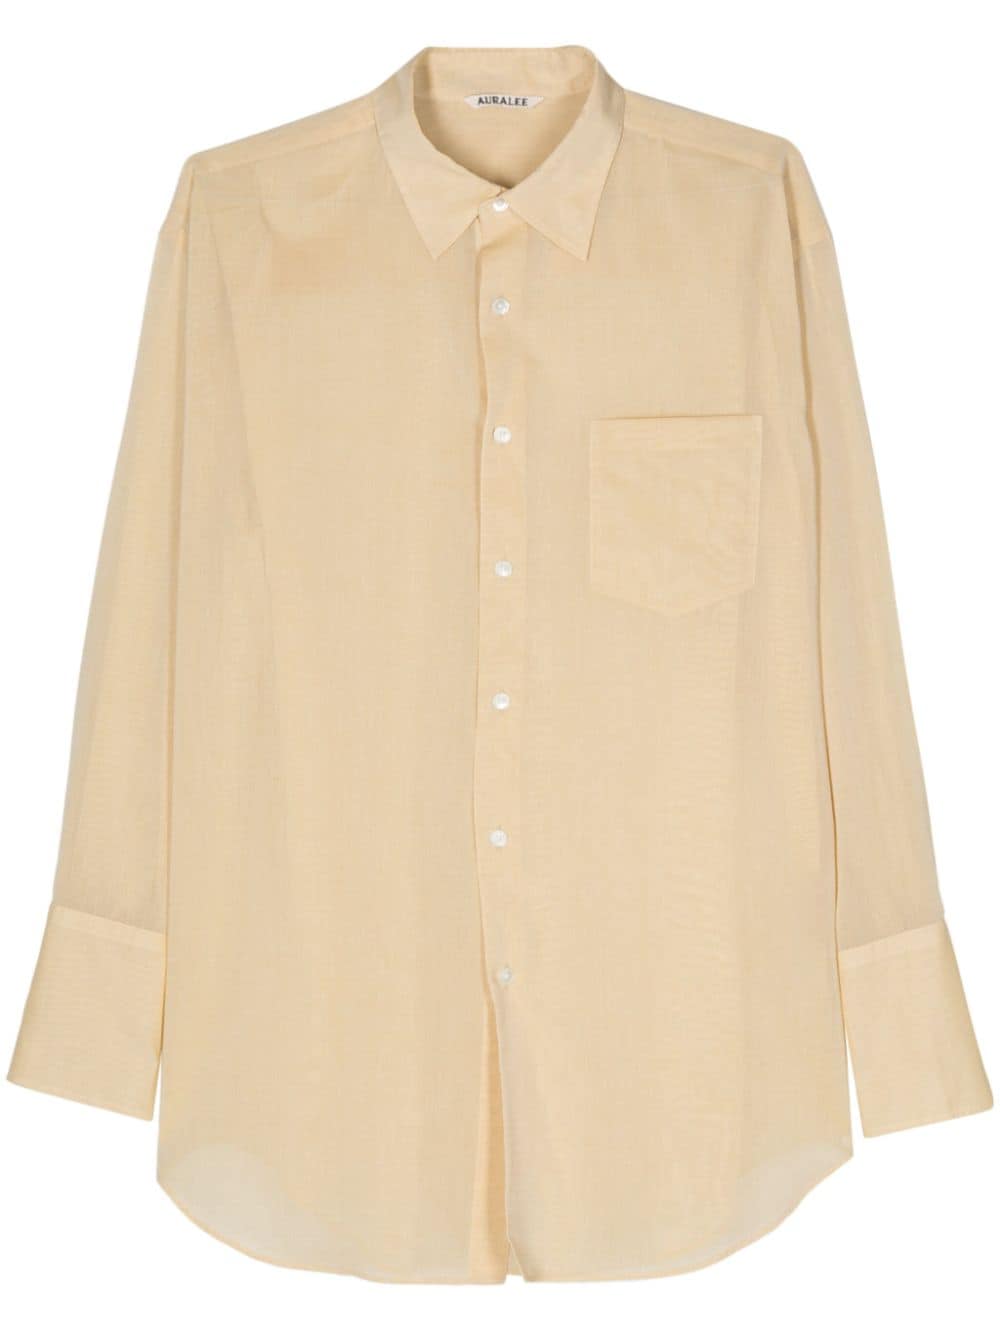 Auralee chambray cotton shirt - Yellow